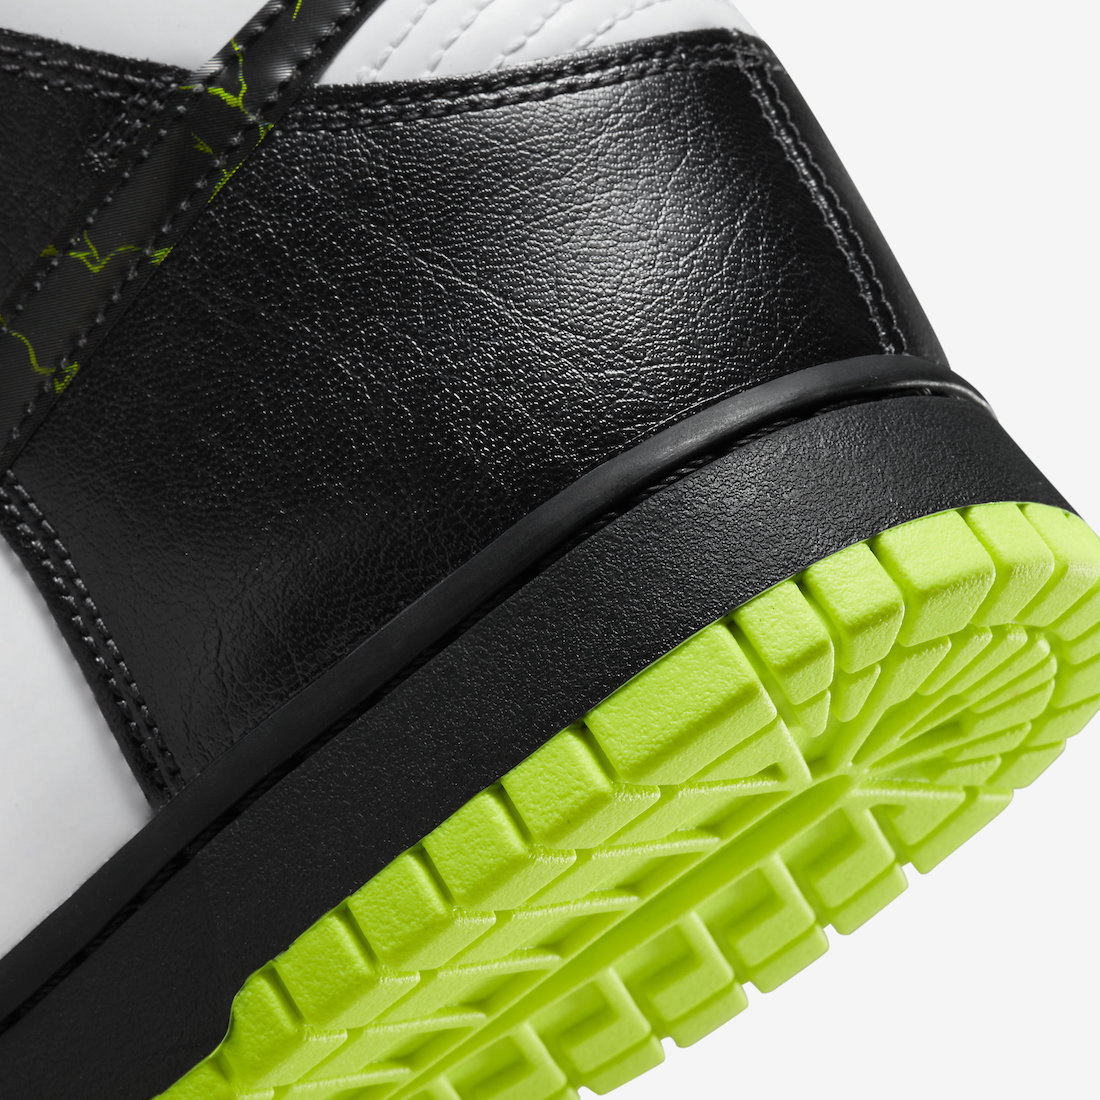 Nike Dunk High Electric White Black Volt FD0732-100 Release Date Info